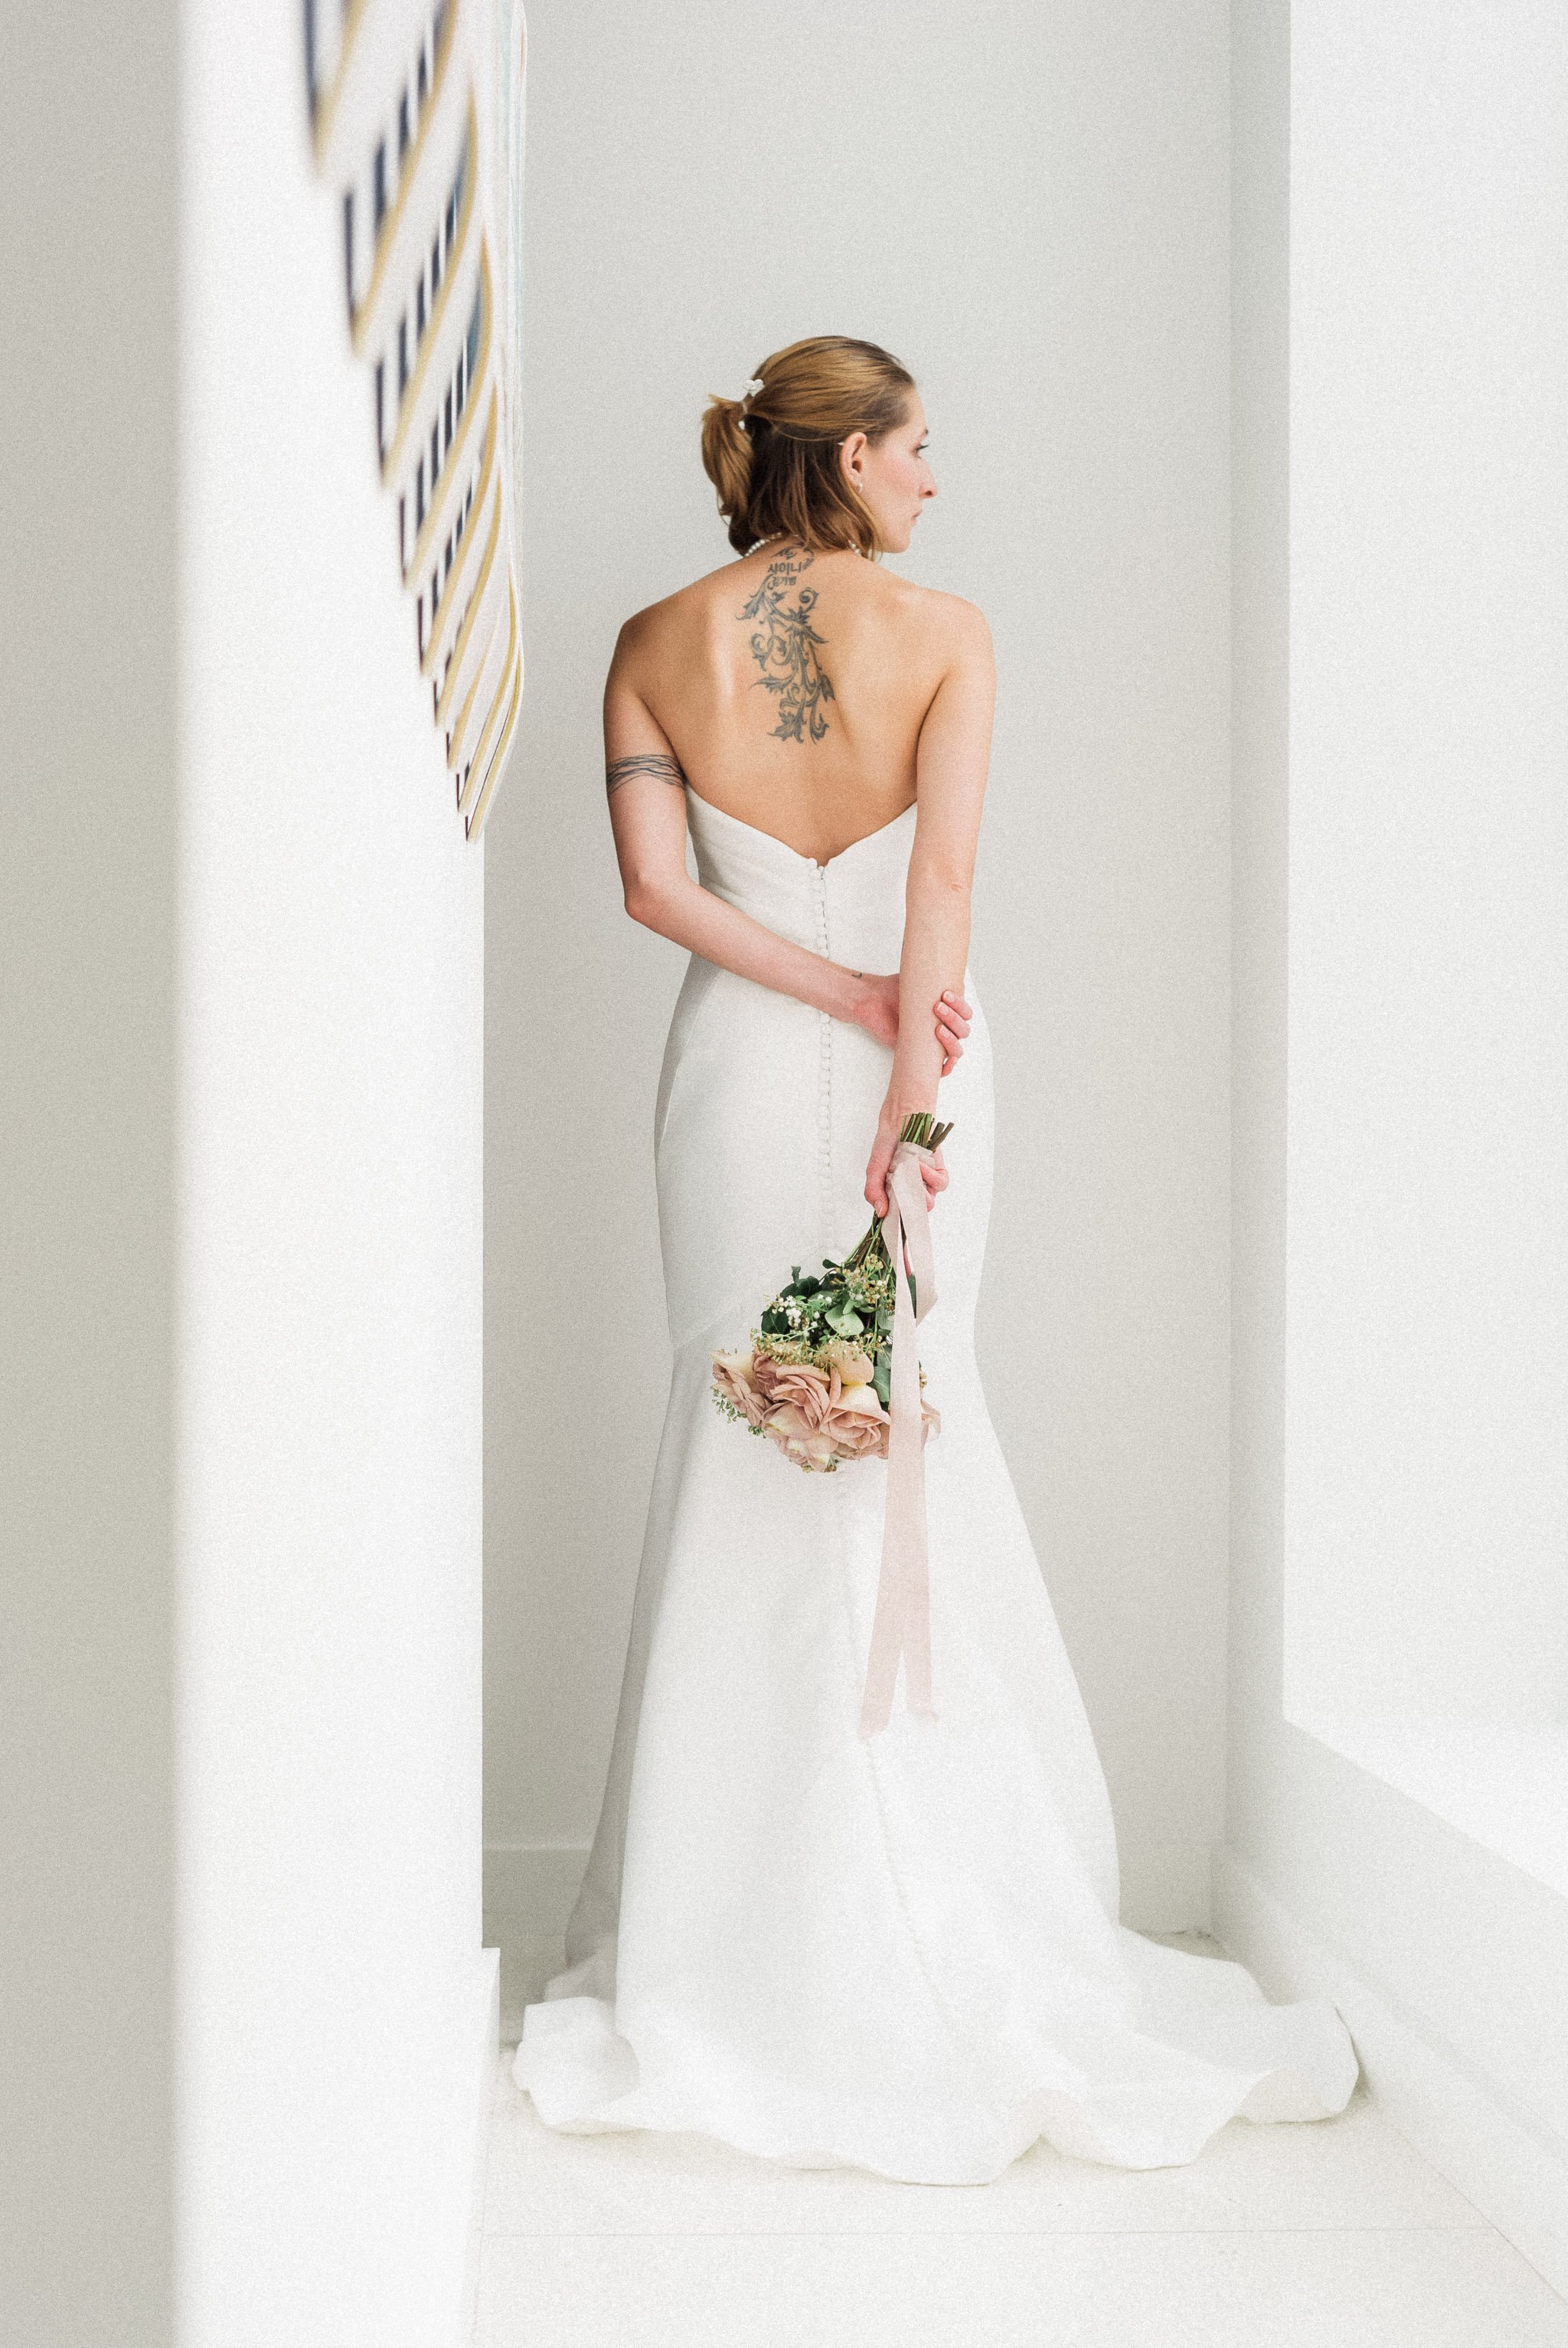 Wedding Photographer in Chicago - Luxury Midwest Weddings - Alisha Trahms  Photography